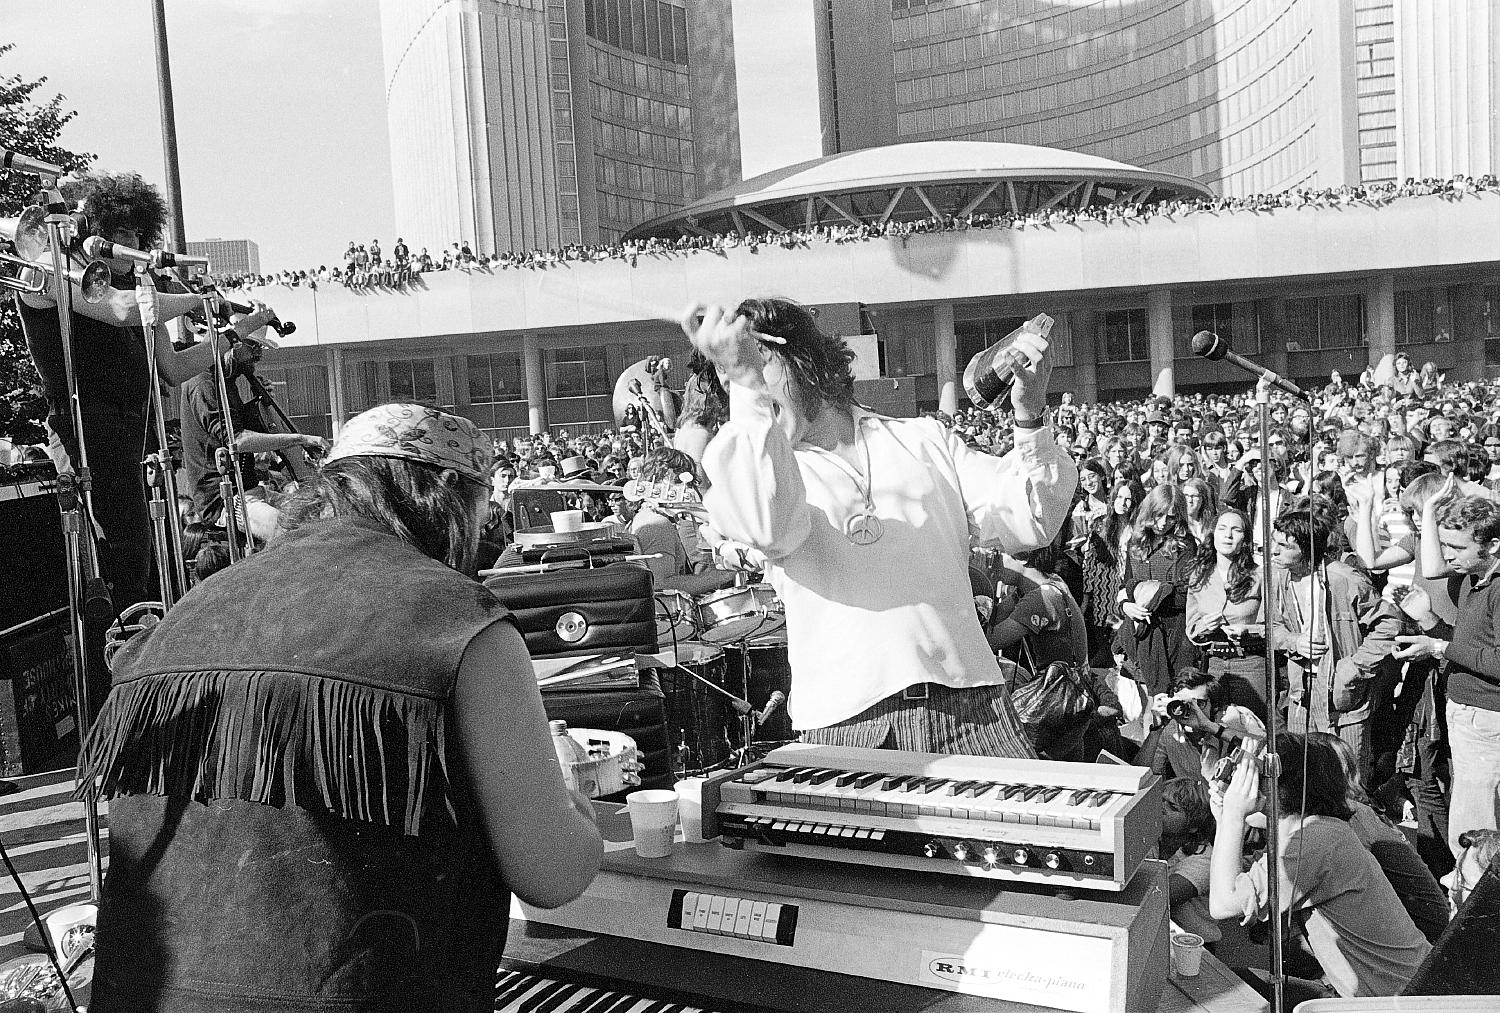 Lighthouse Concert at City Hall, Toronto, 1970.